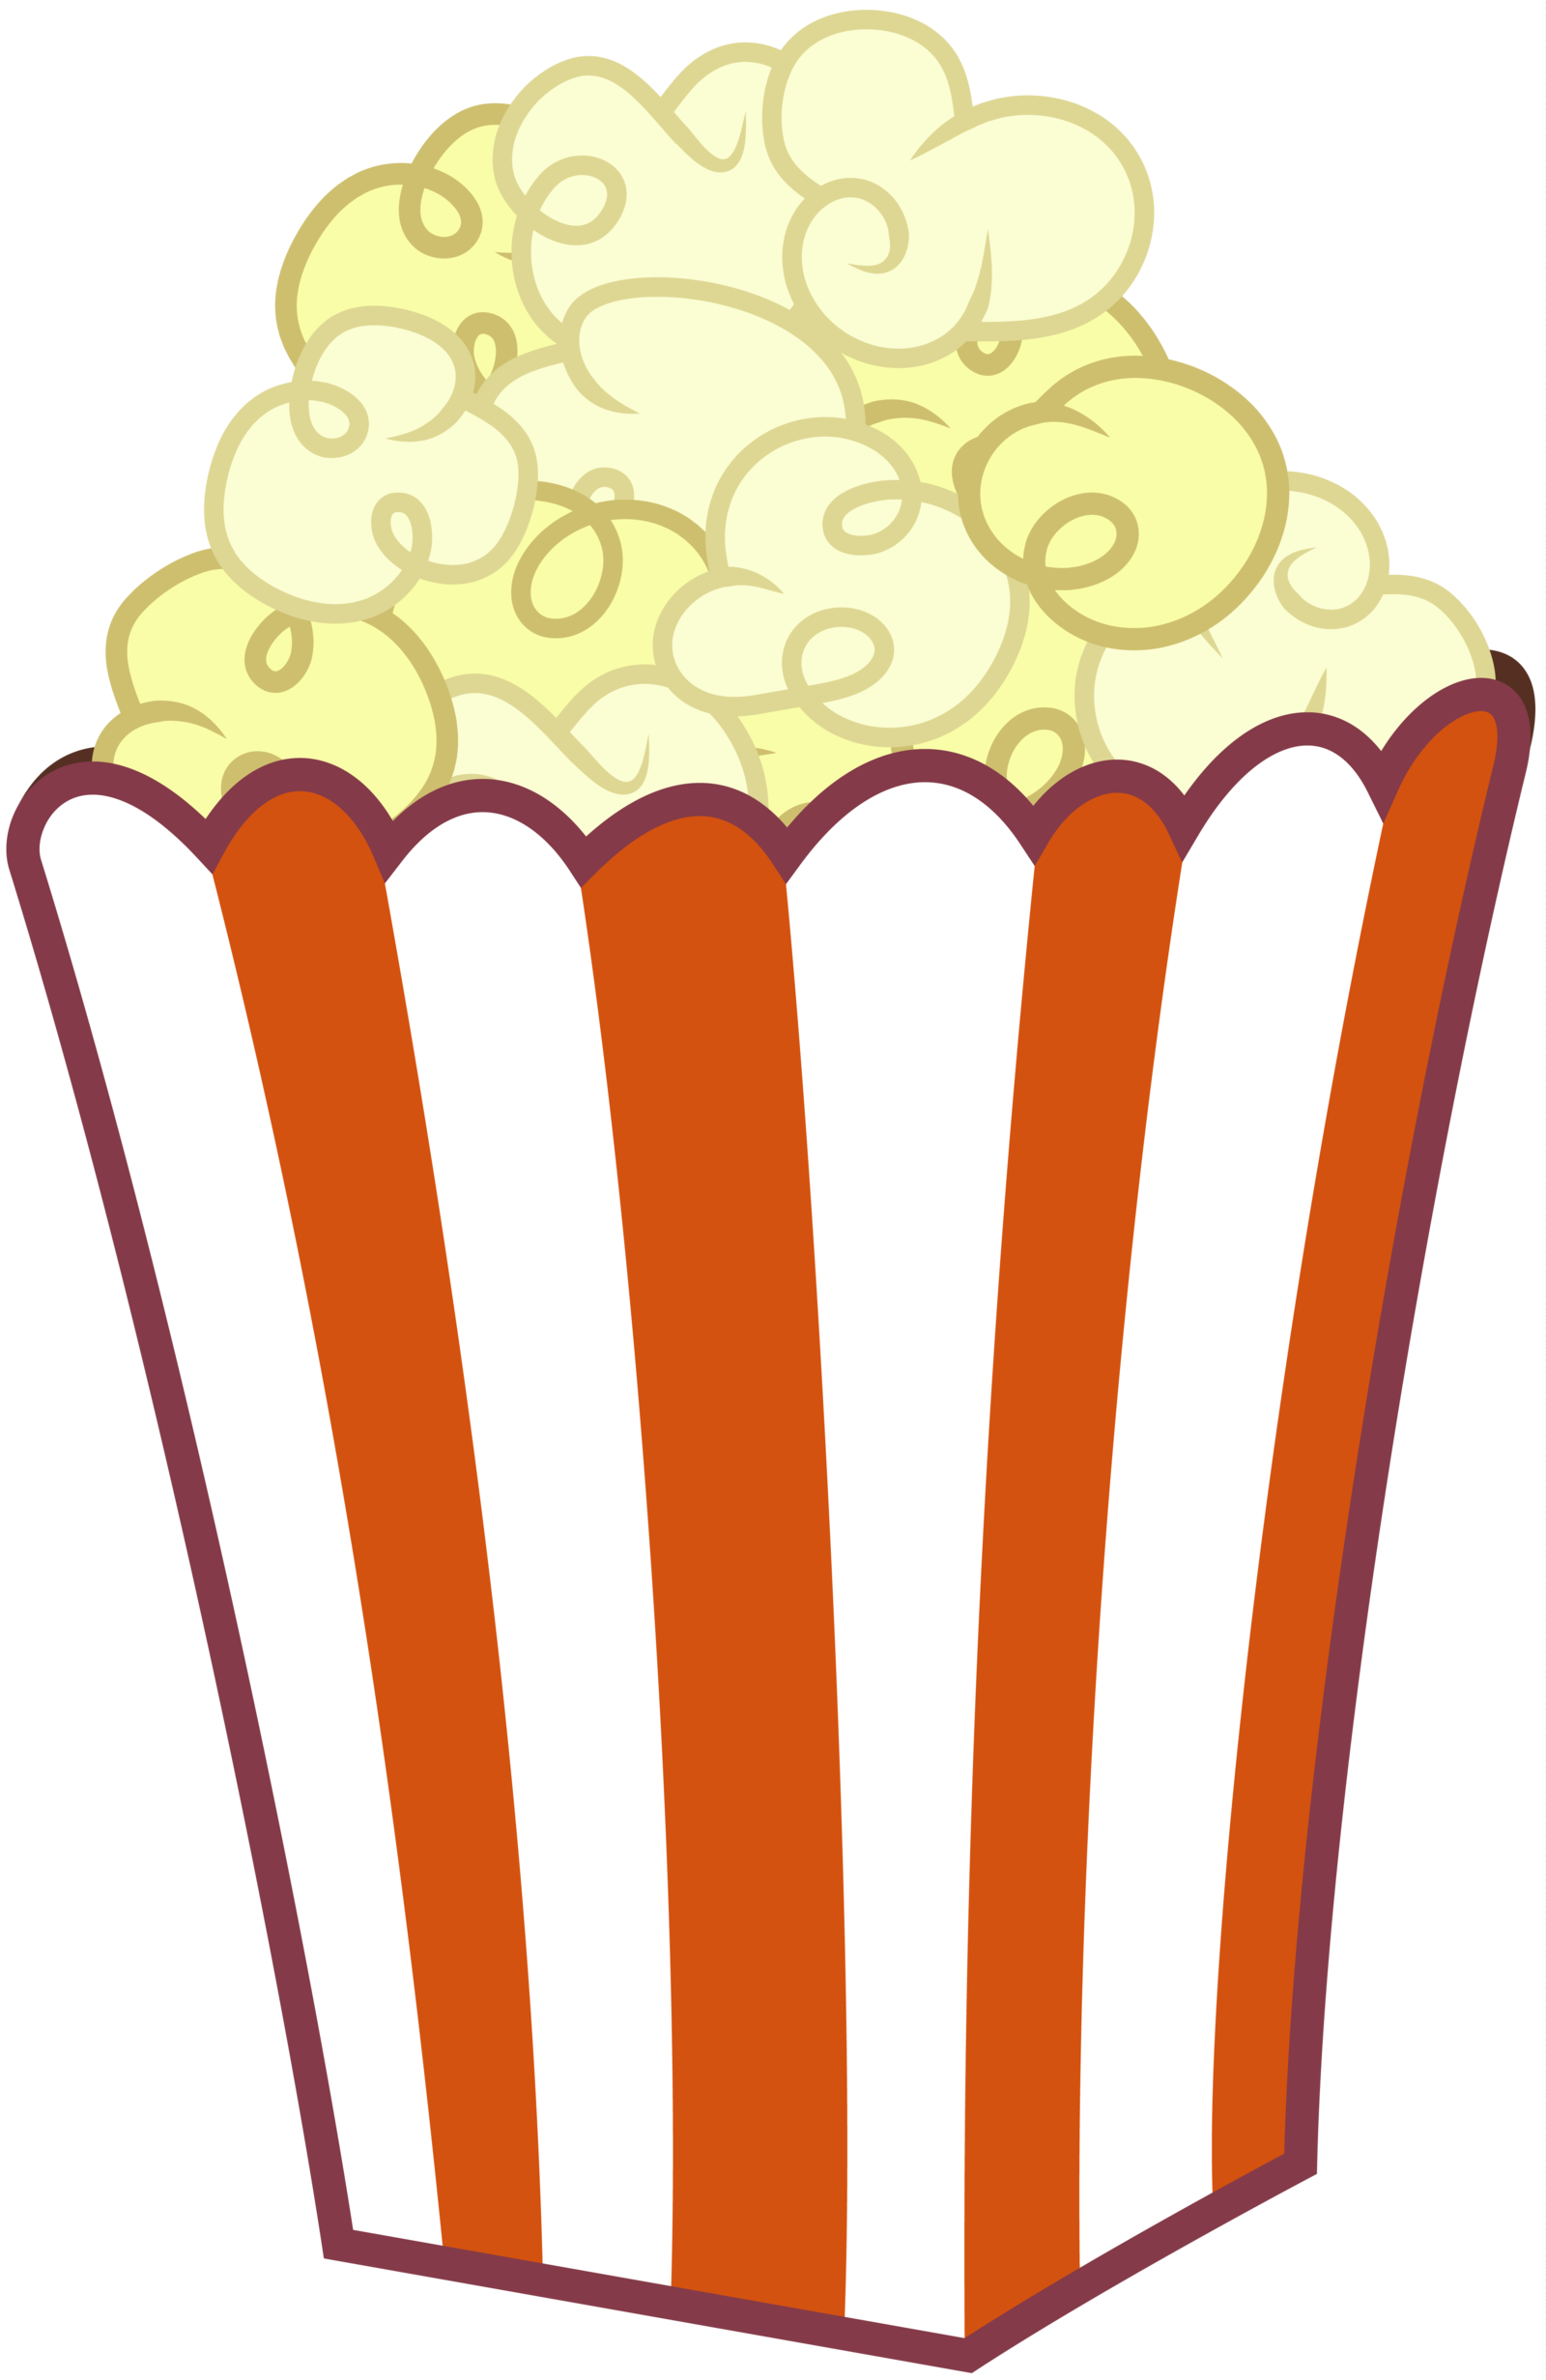 Hollywood popcorn